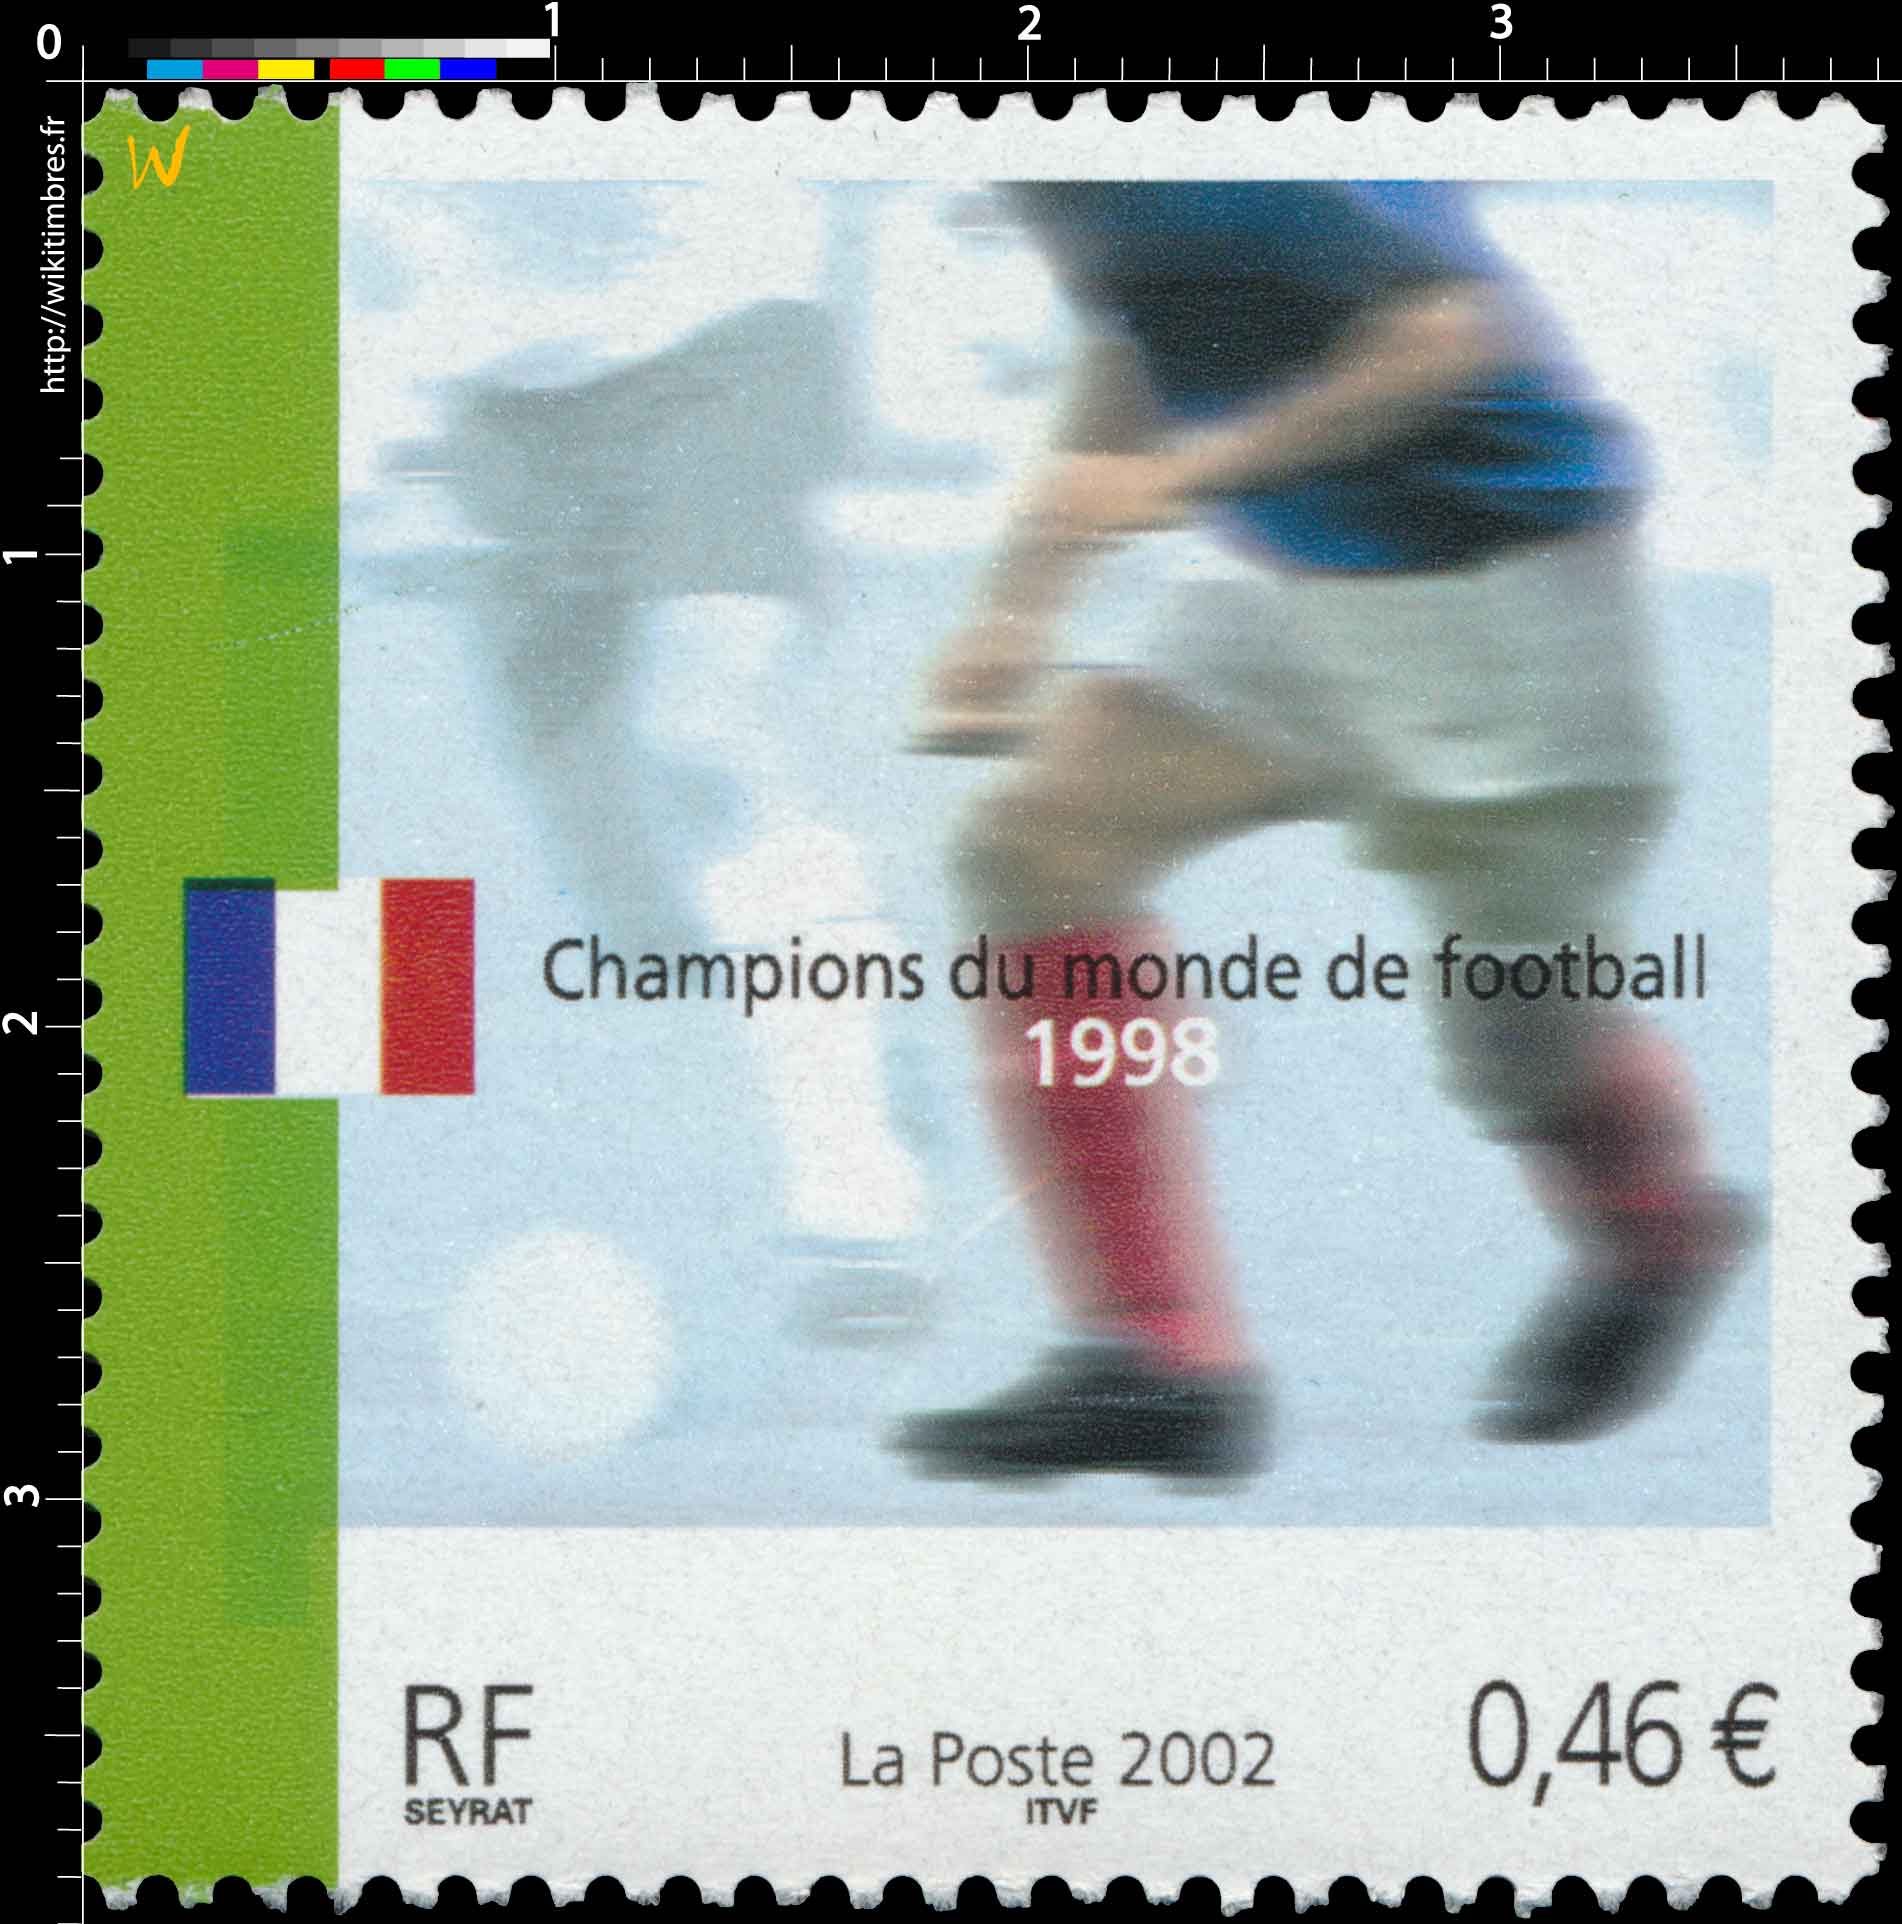 2002 Champions du monde de Football 1998